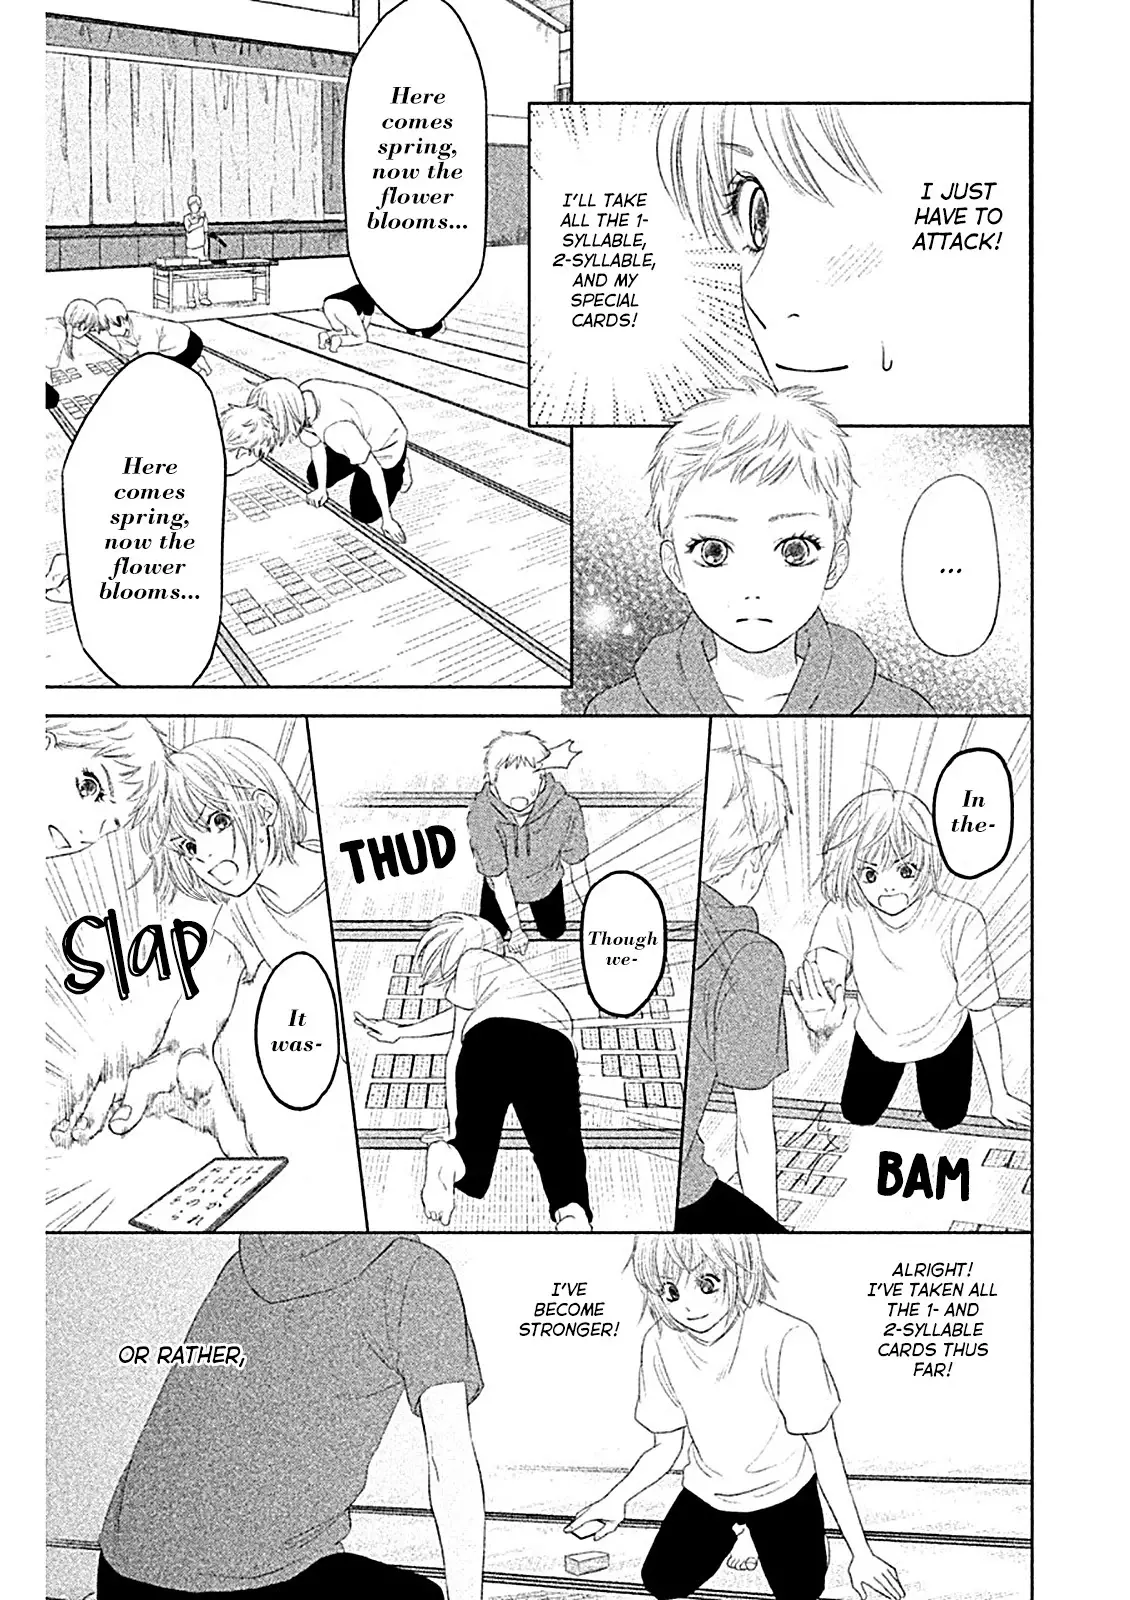 Chihayafuru: Middle School Arc - 1 page 21